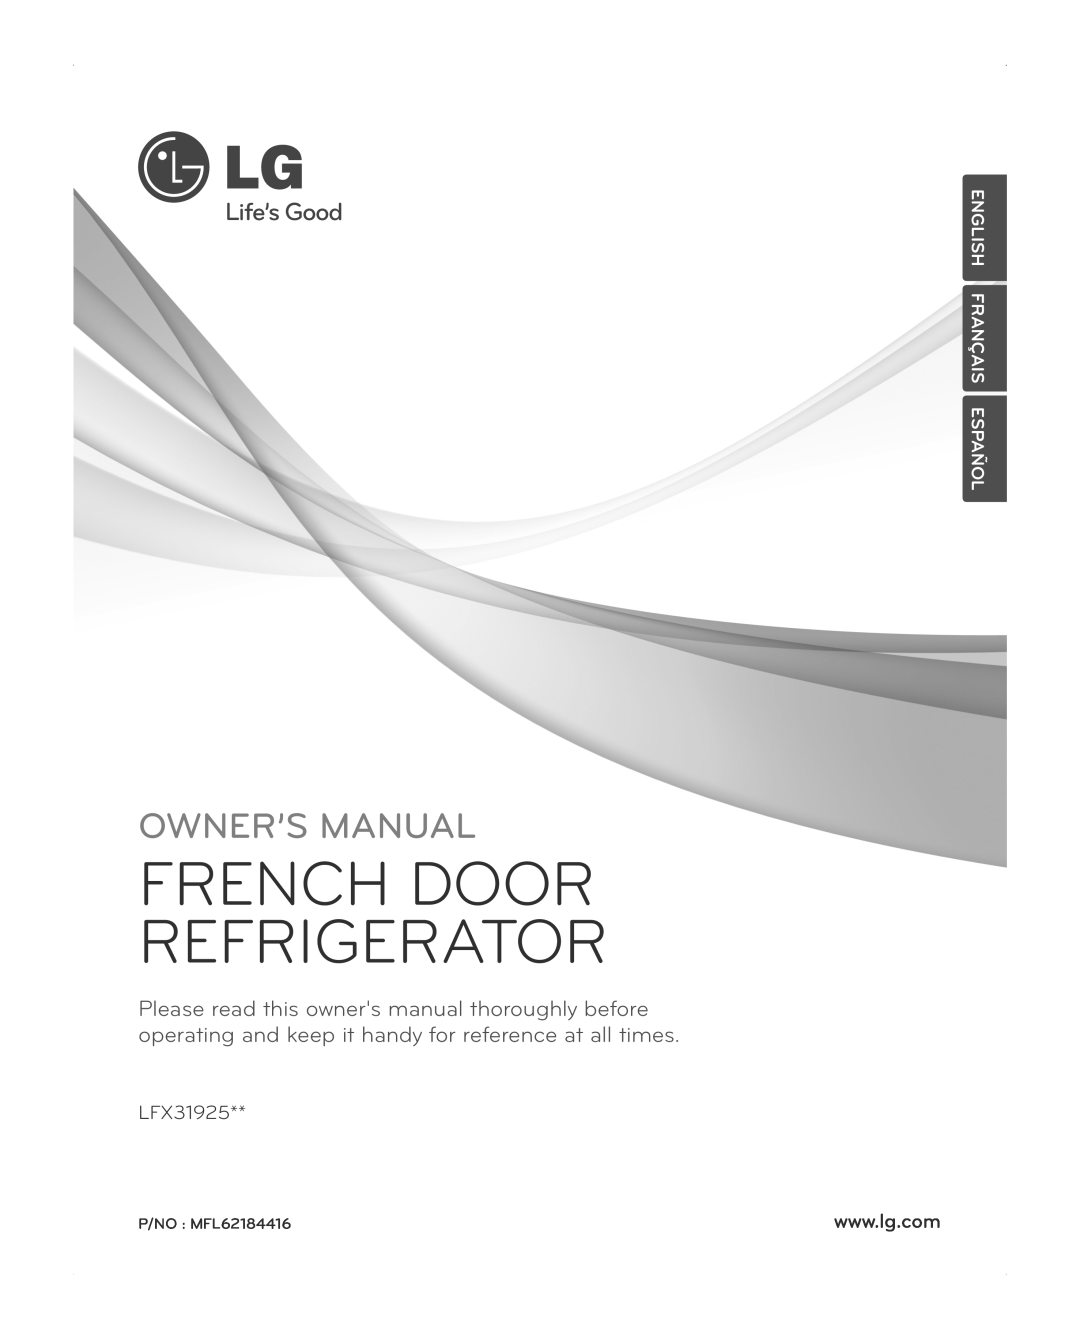 LG Electronics LFX31945ST owner manual LFX31925, English Français Español, P/NO MFL62184416, French Door Refrigerator 